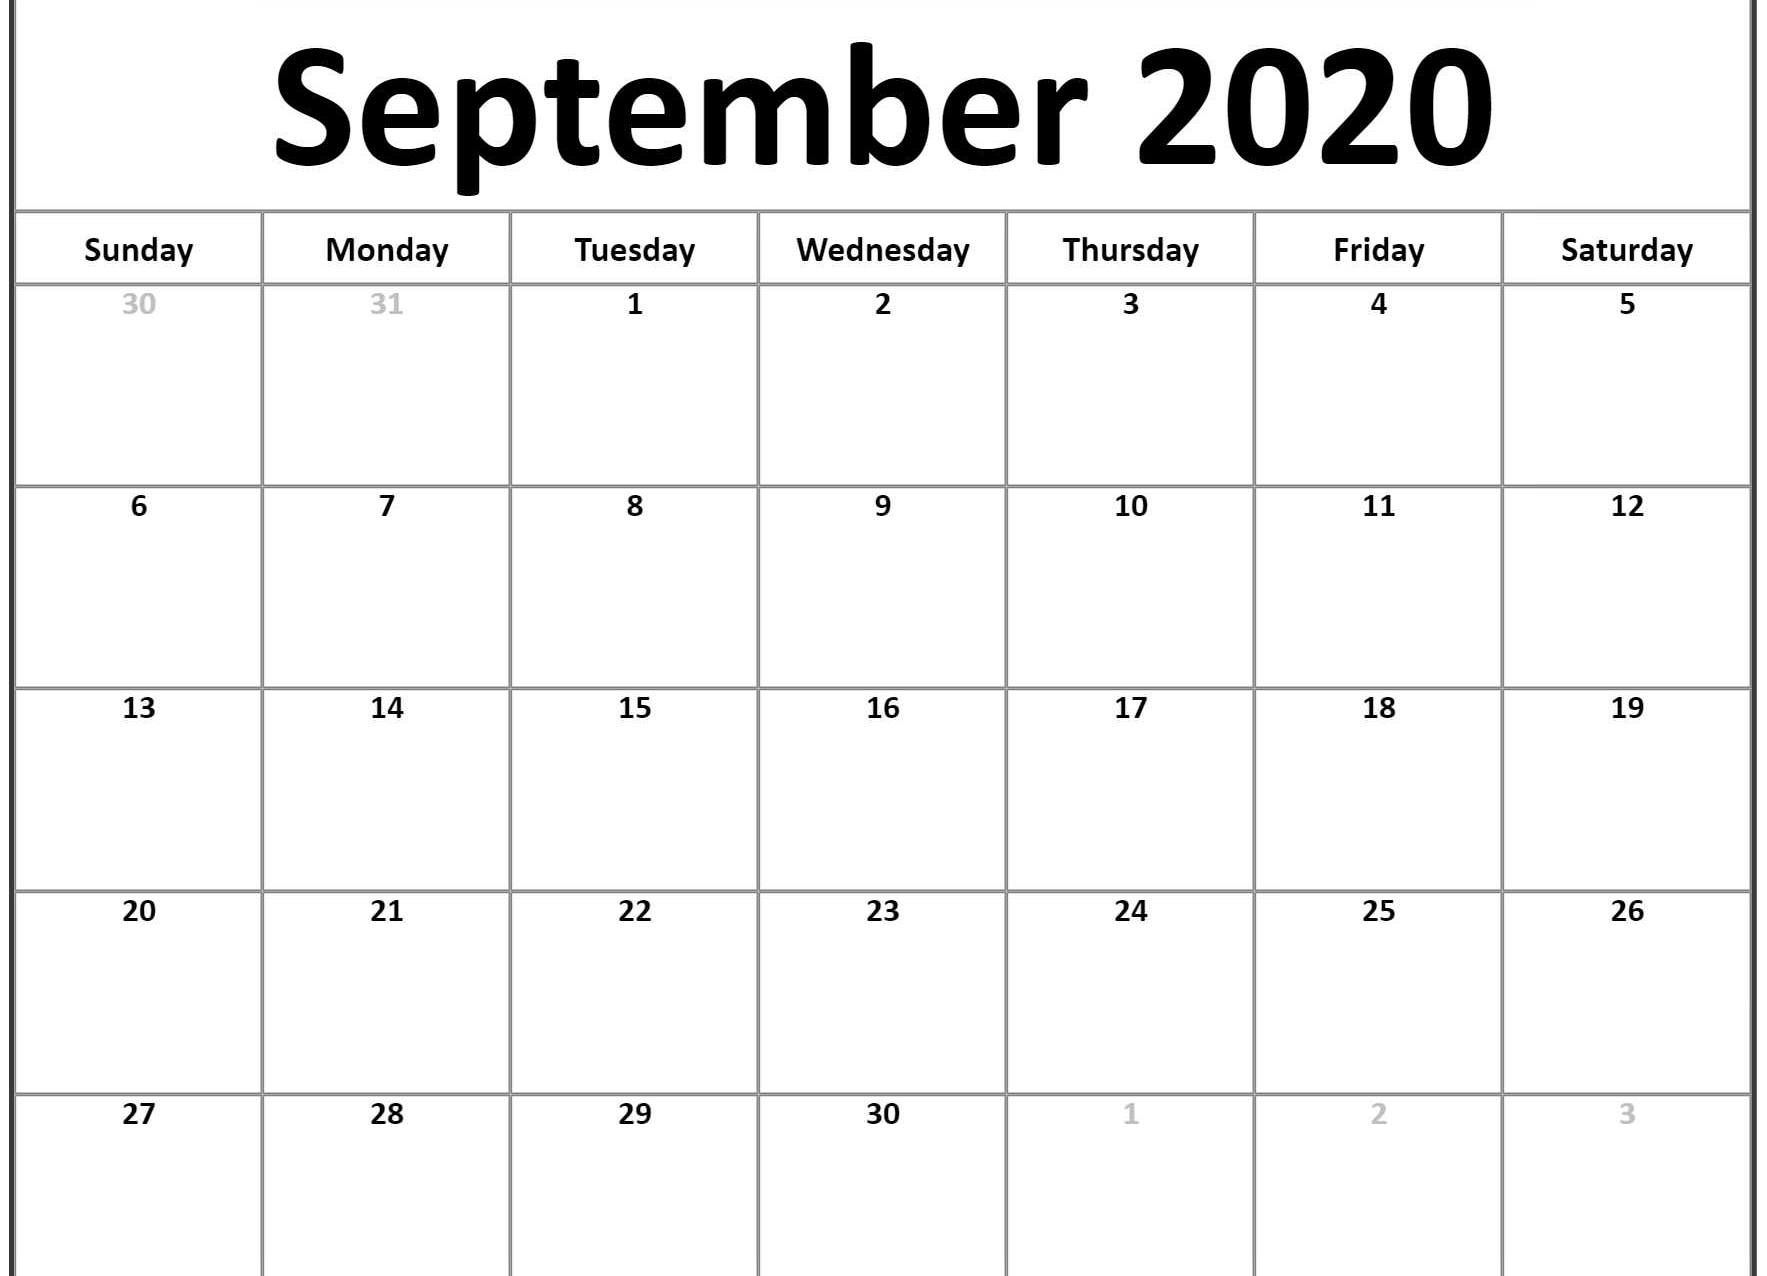 September 2020 Calendar Template Word, Pdf, Excel Format